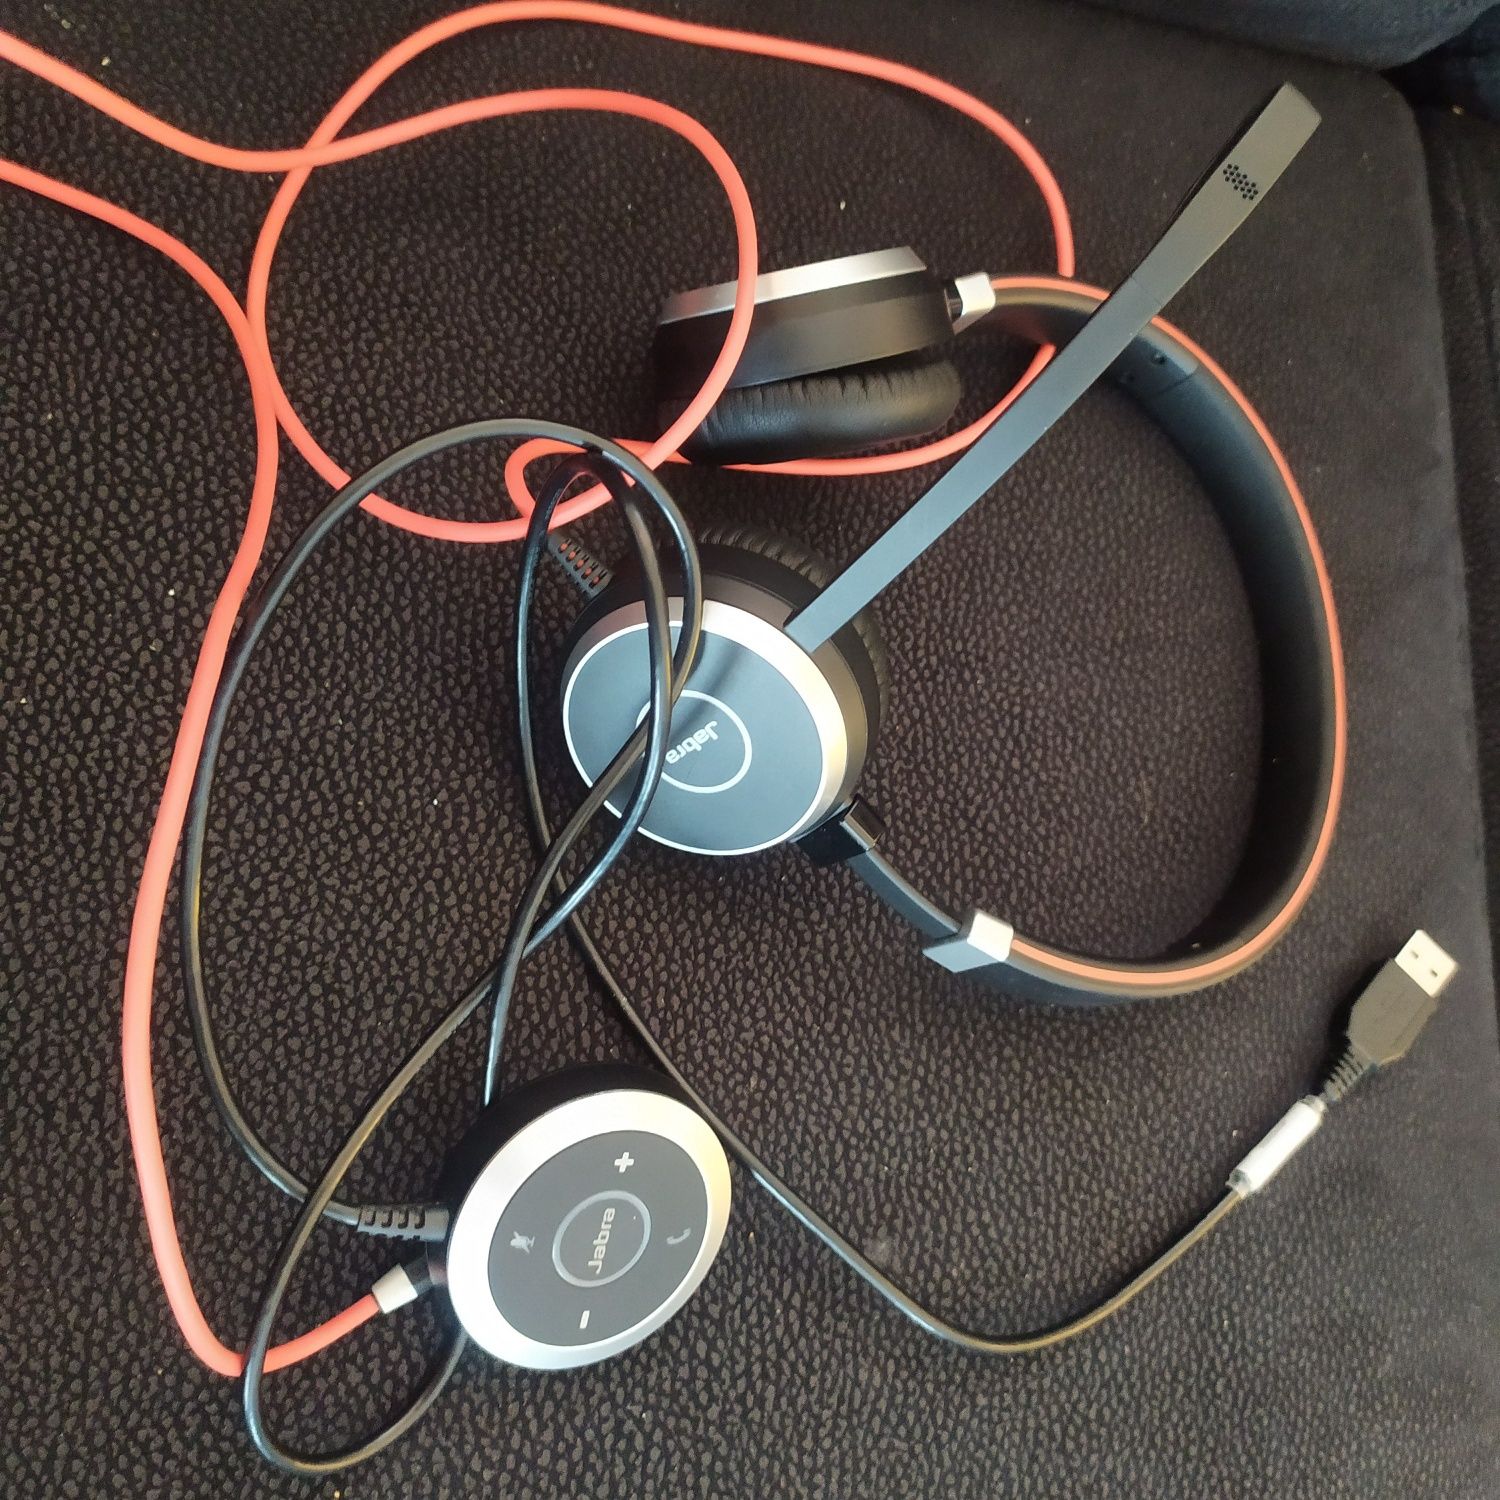 Słuchawki Jabra evolve40 model hsc 017 z adapterem